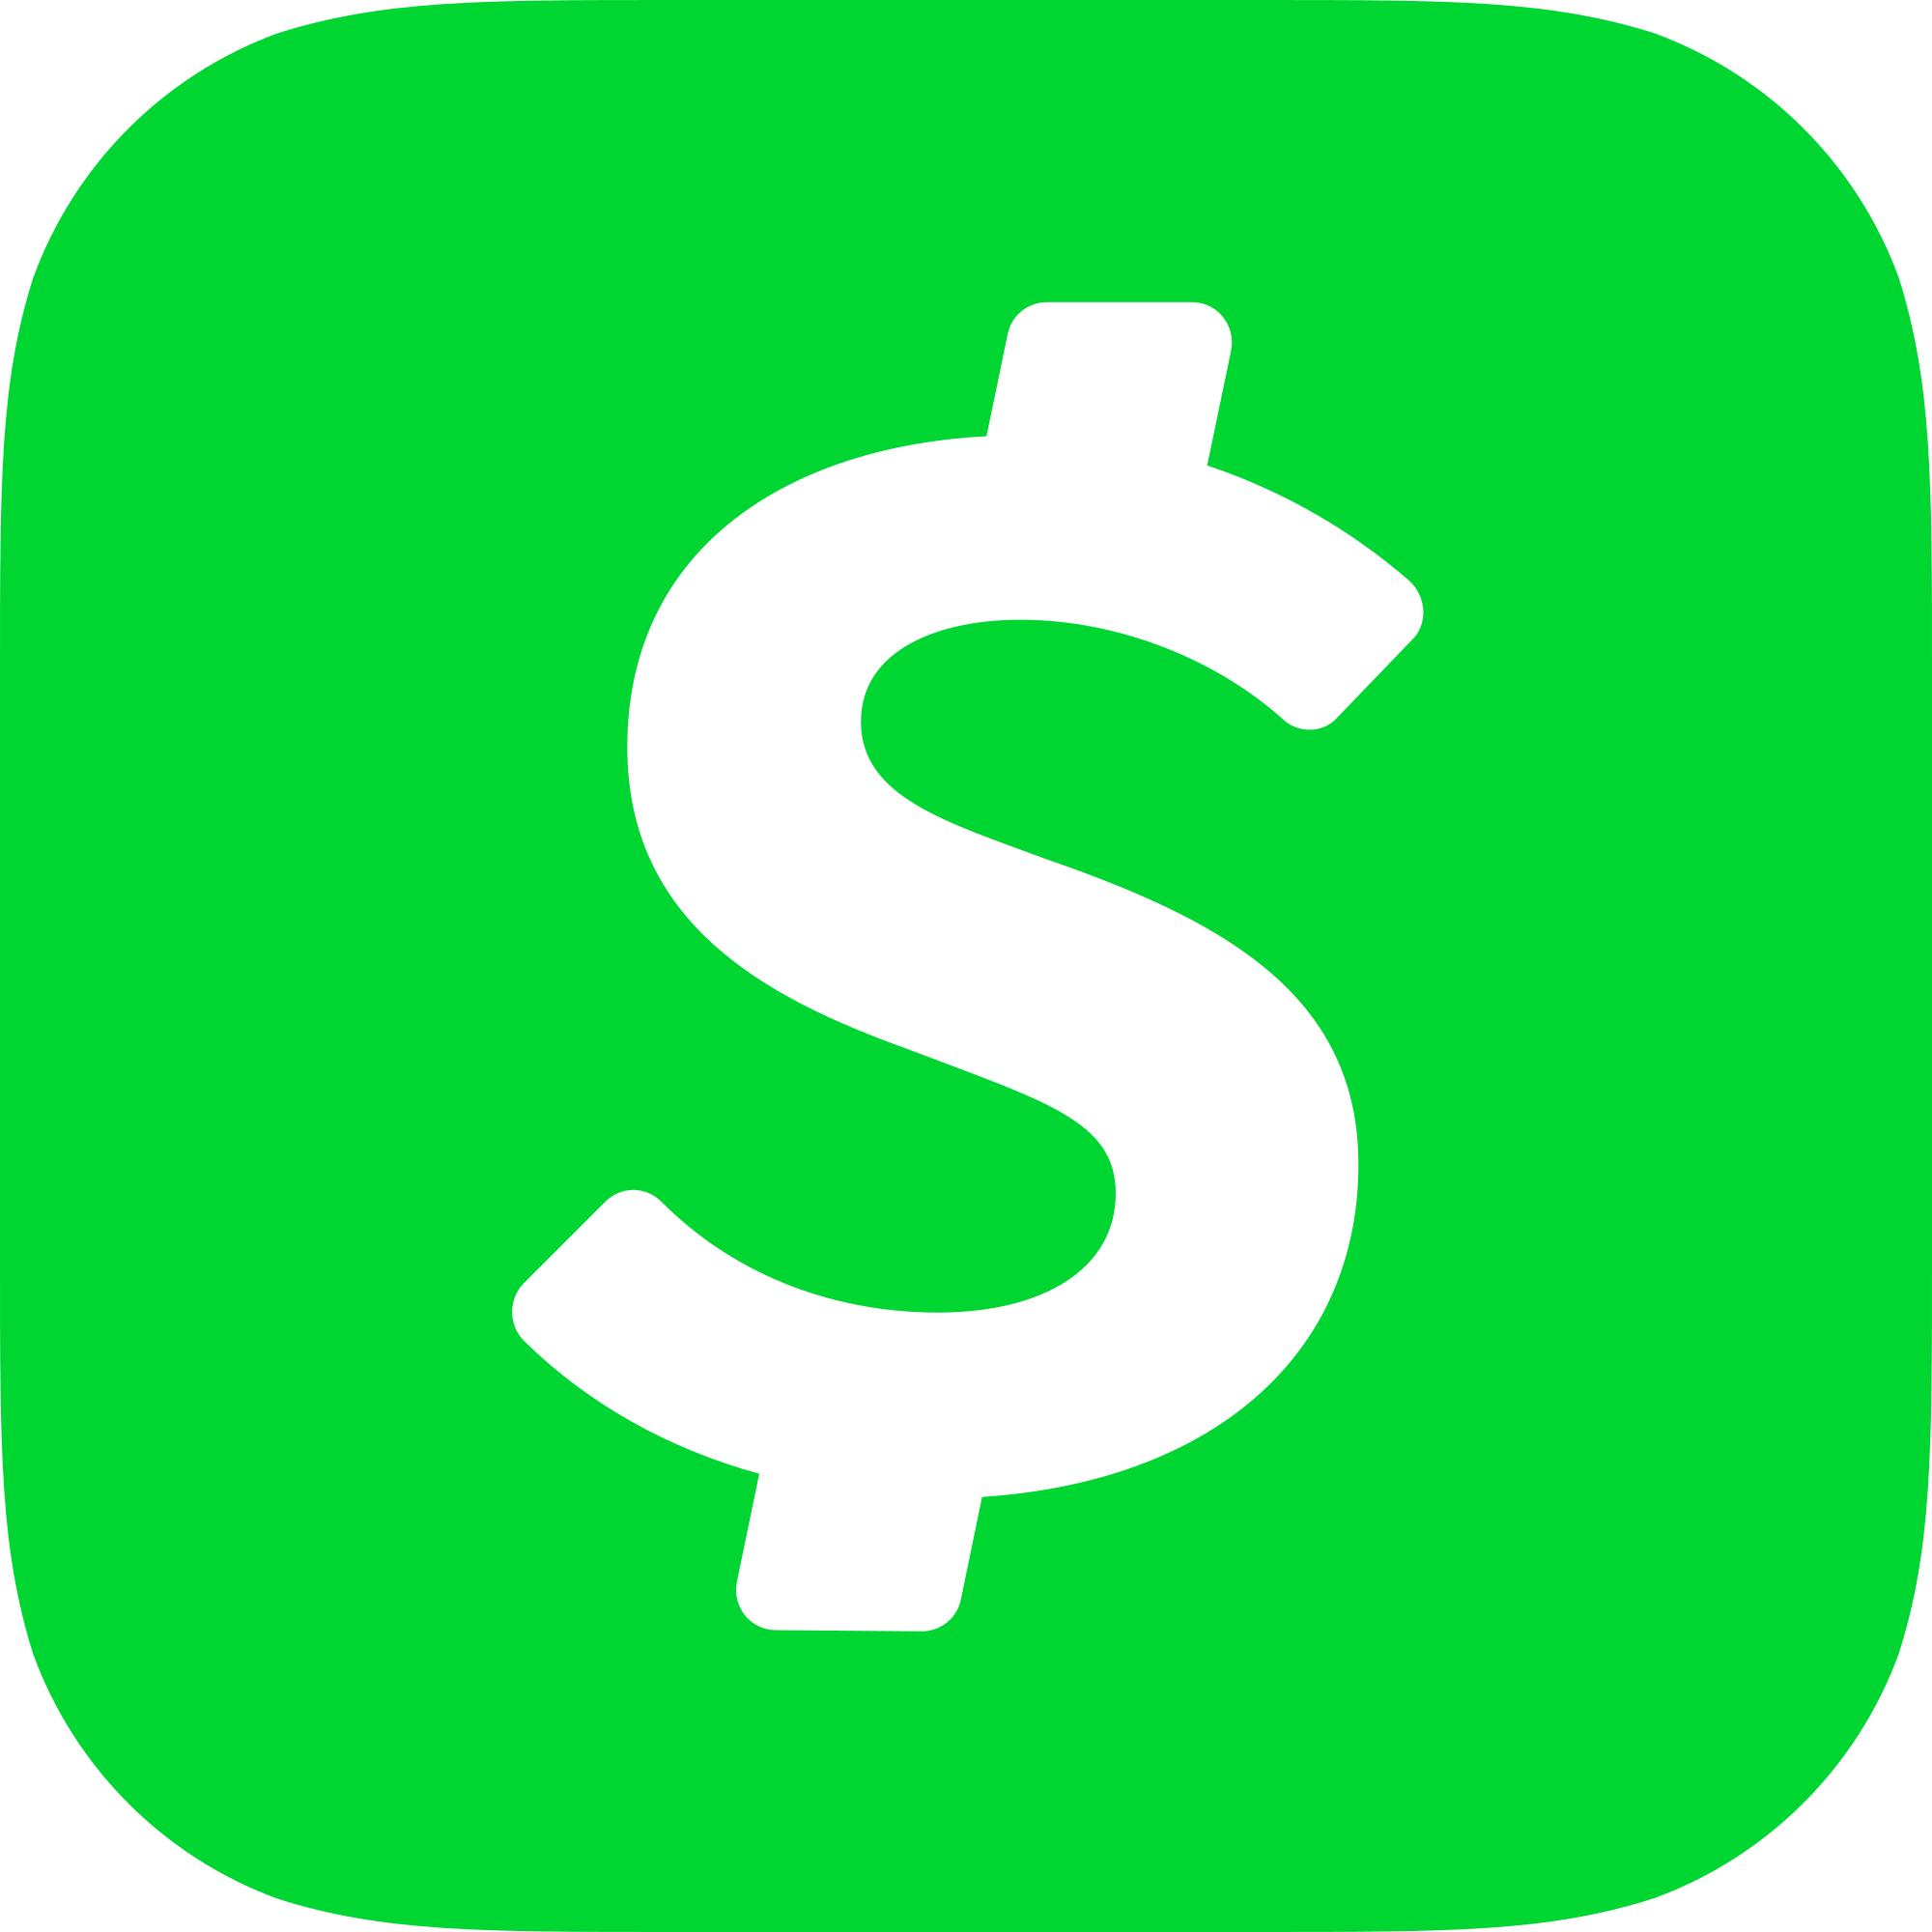 App Logo - File:Square Cash app logo.svg - Wikimedia Commons